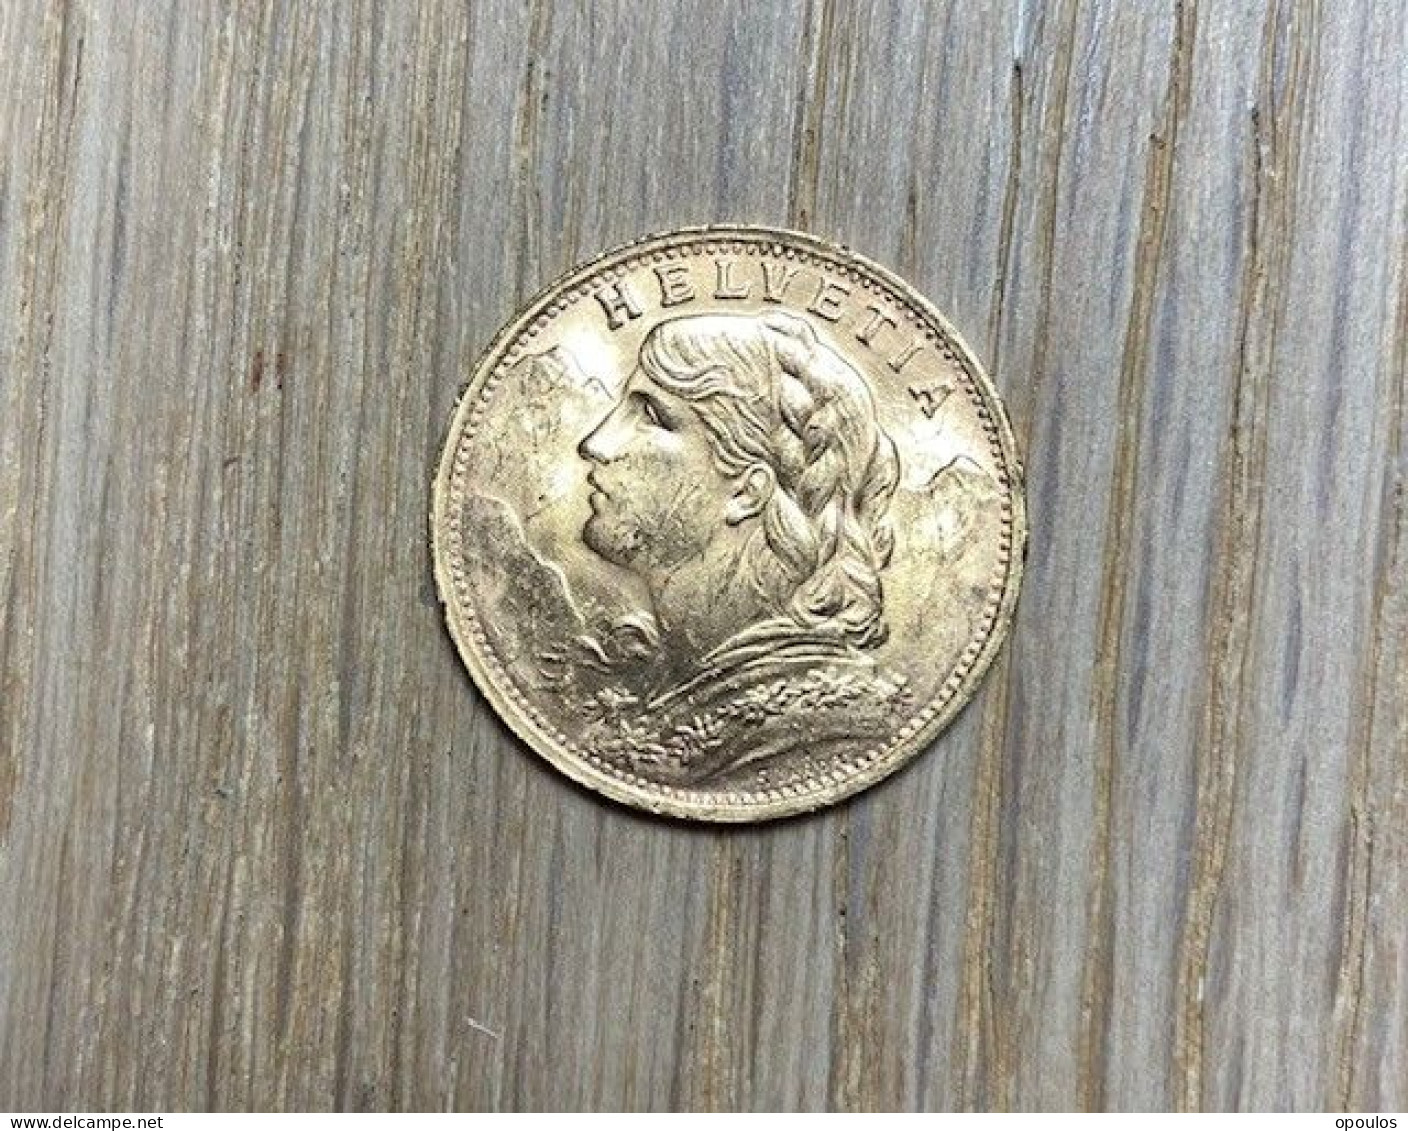 Pièce De 20 Francs Suisse Or - HELVETIA - 1935 - 20 Franken (goud)